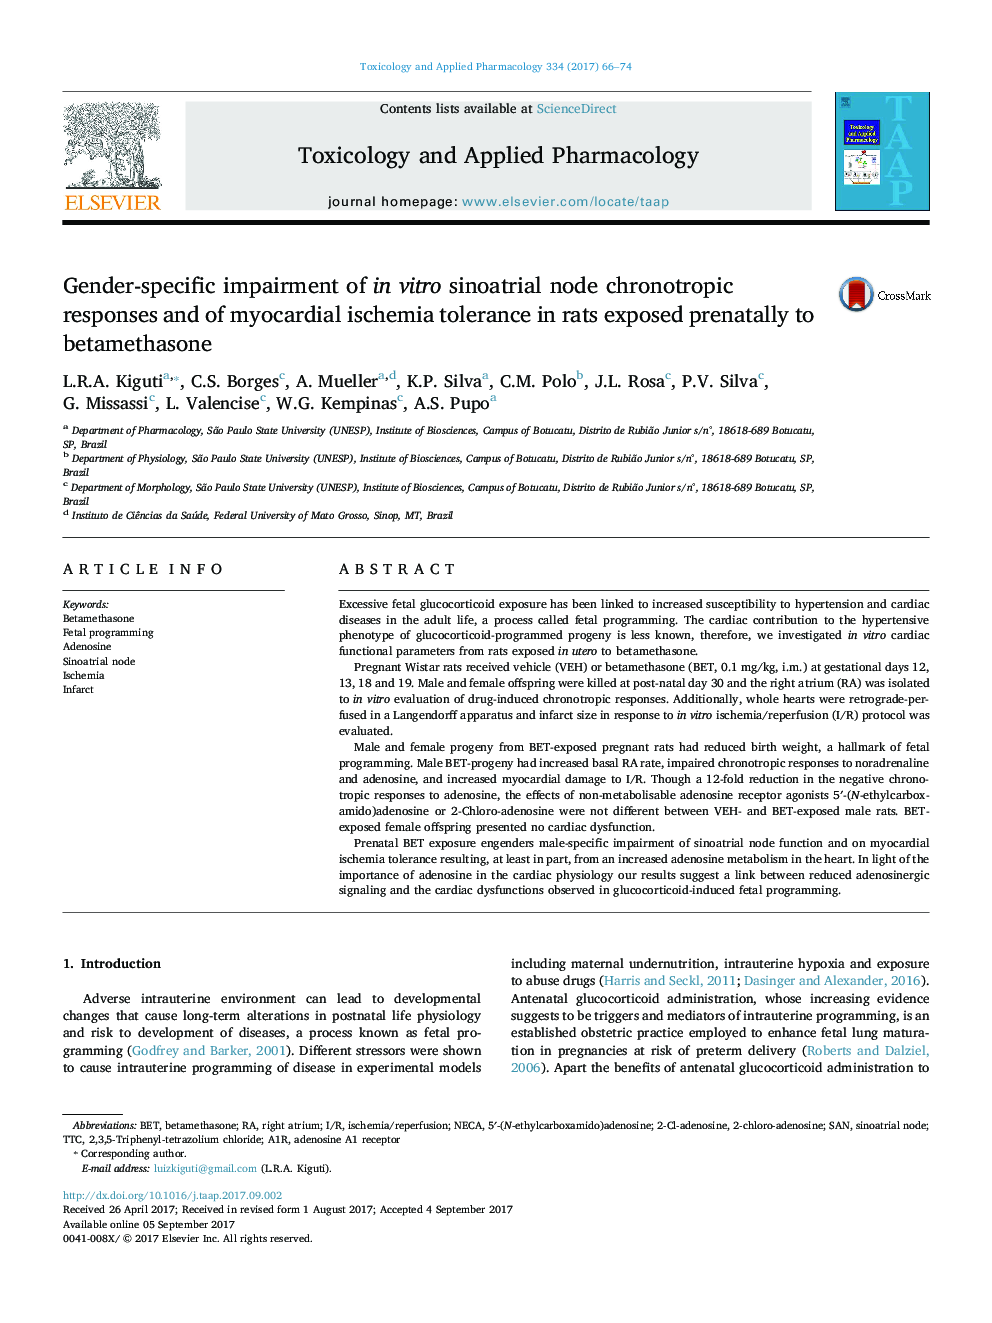 Gender-specific impairment of in vitro sinoatrial node chronotropic responses and of myocardial ischemia tolerance in rats exposed prenatally to betamethasone